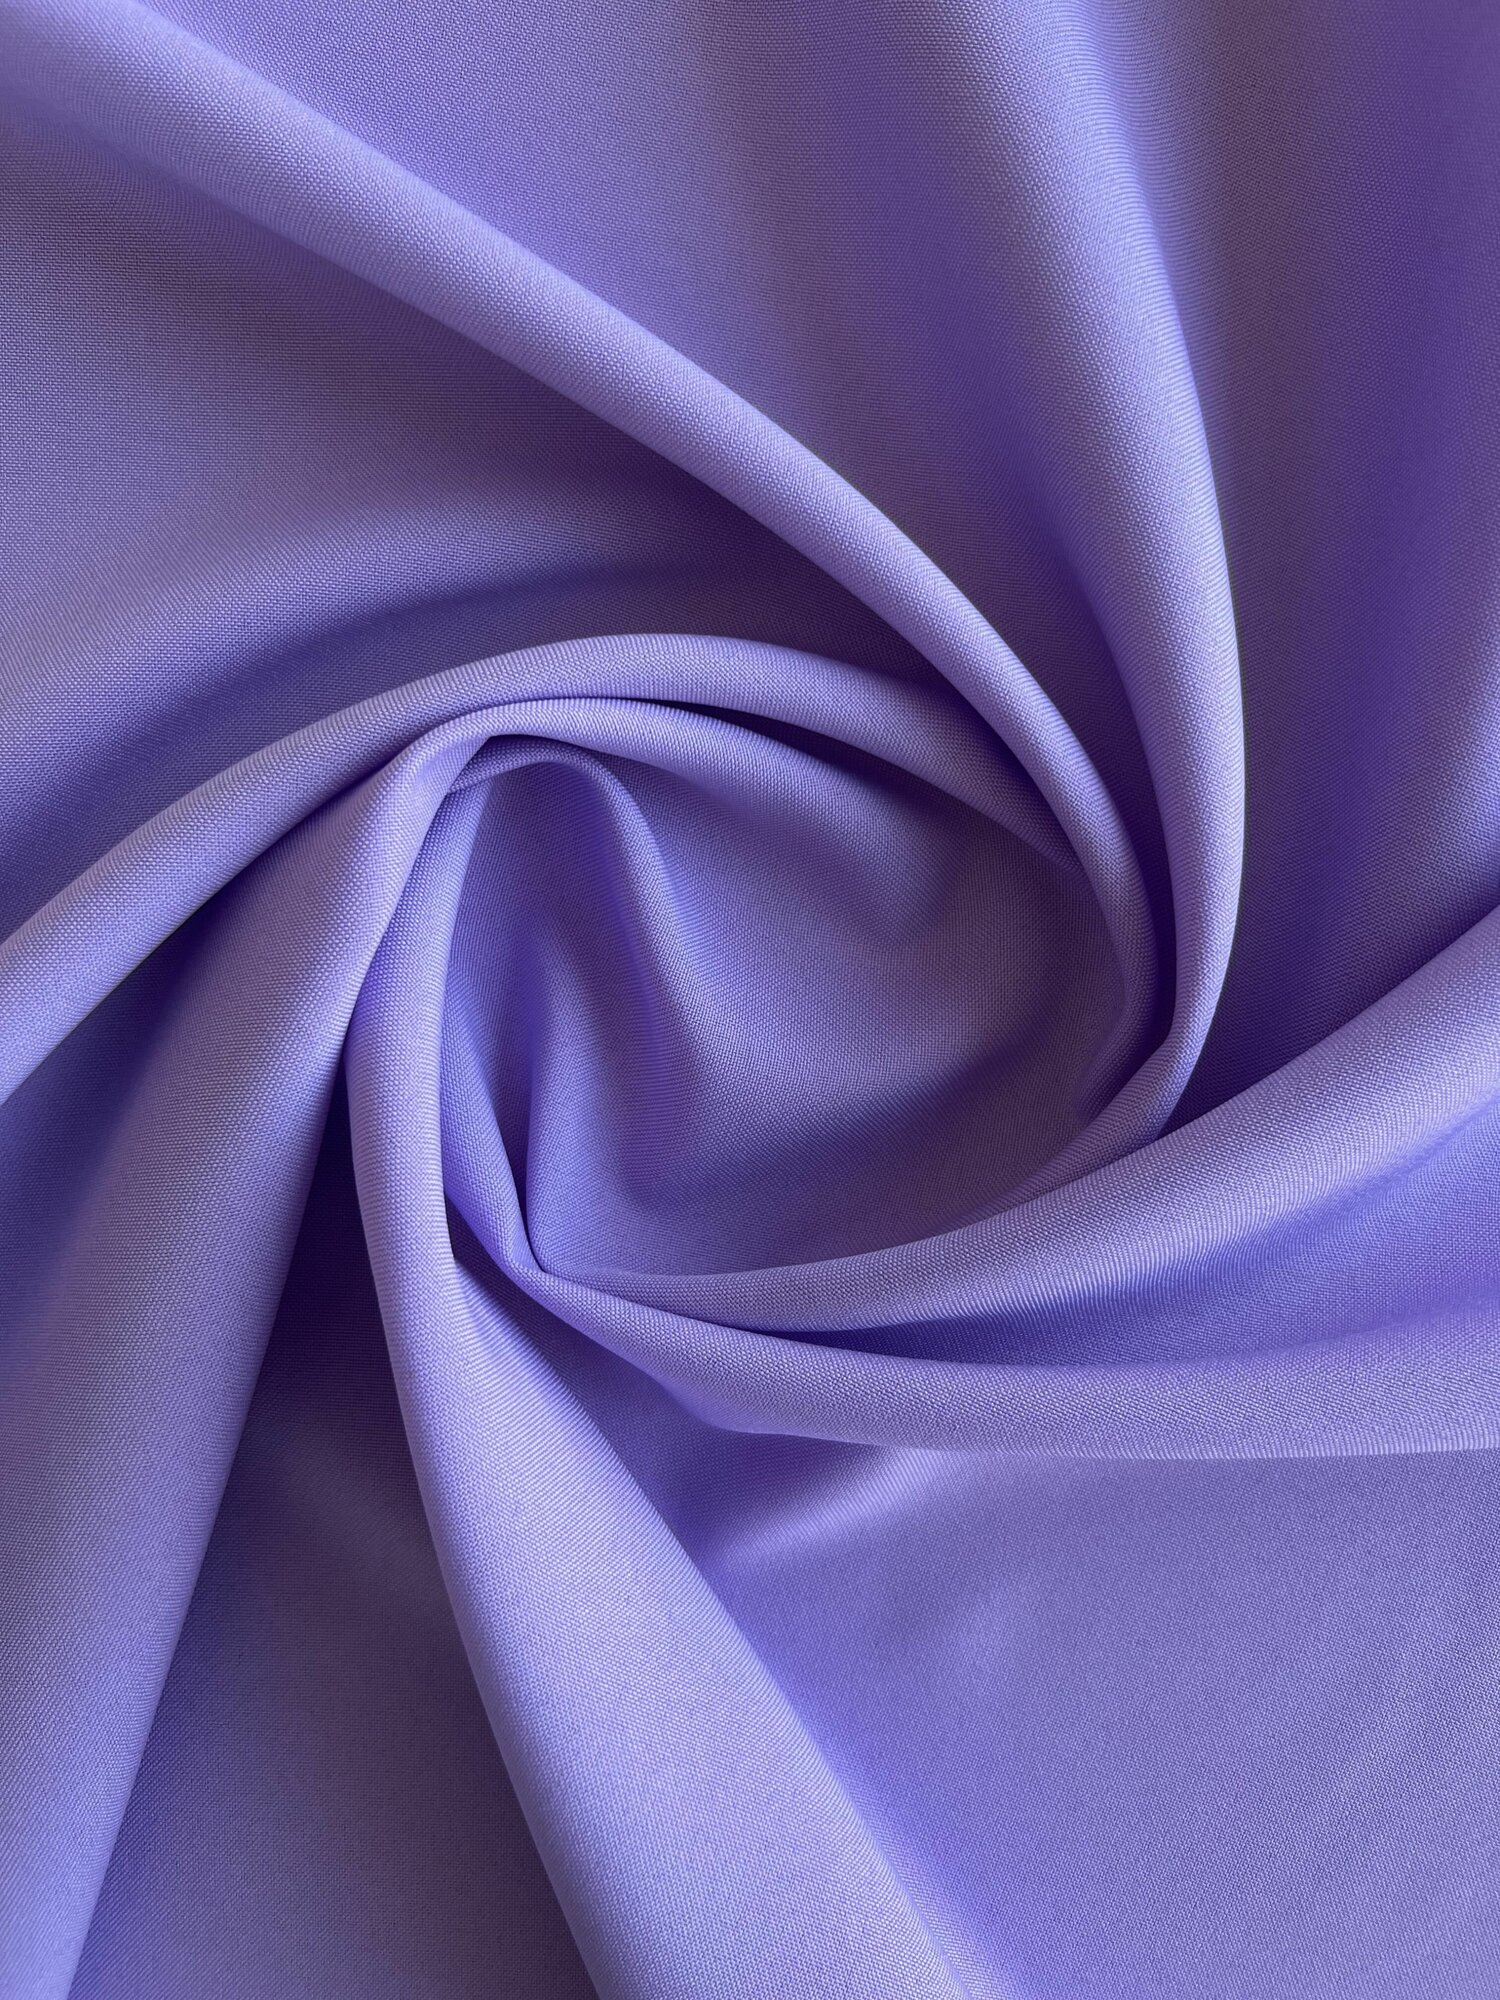 Ткань Габардин Fuhua (100% пэ) цвет фиолетовый, отрез 1м, ширина 1,5м